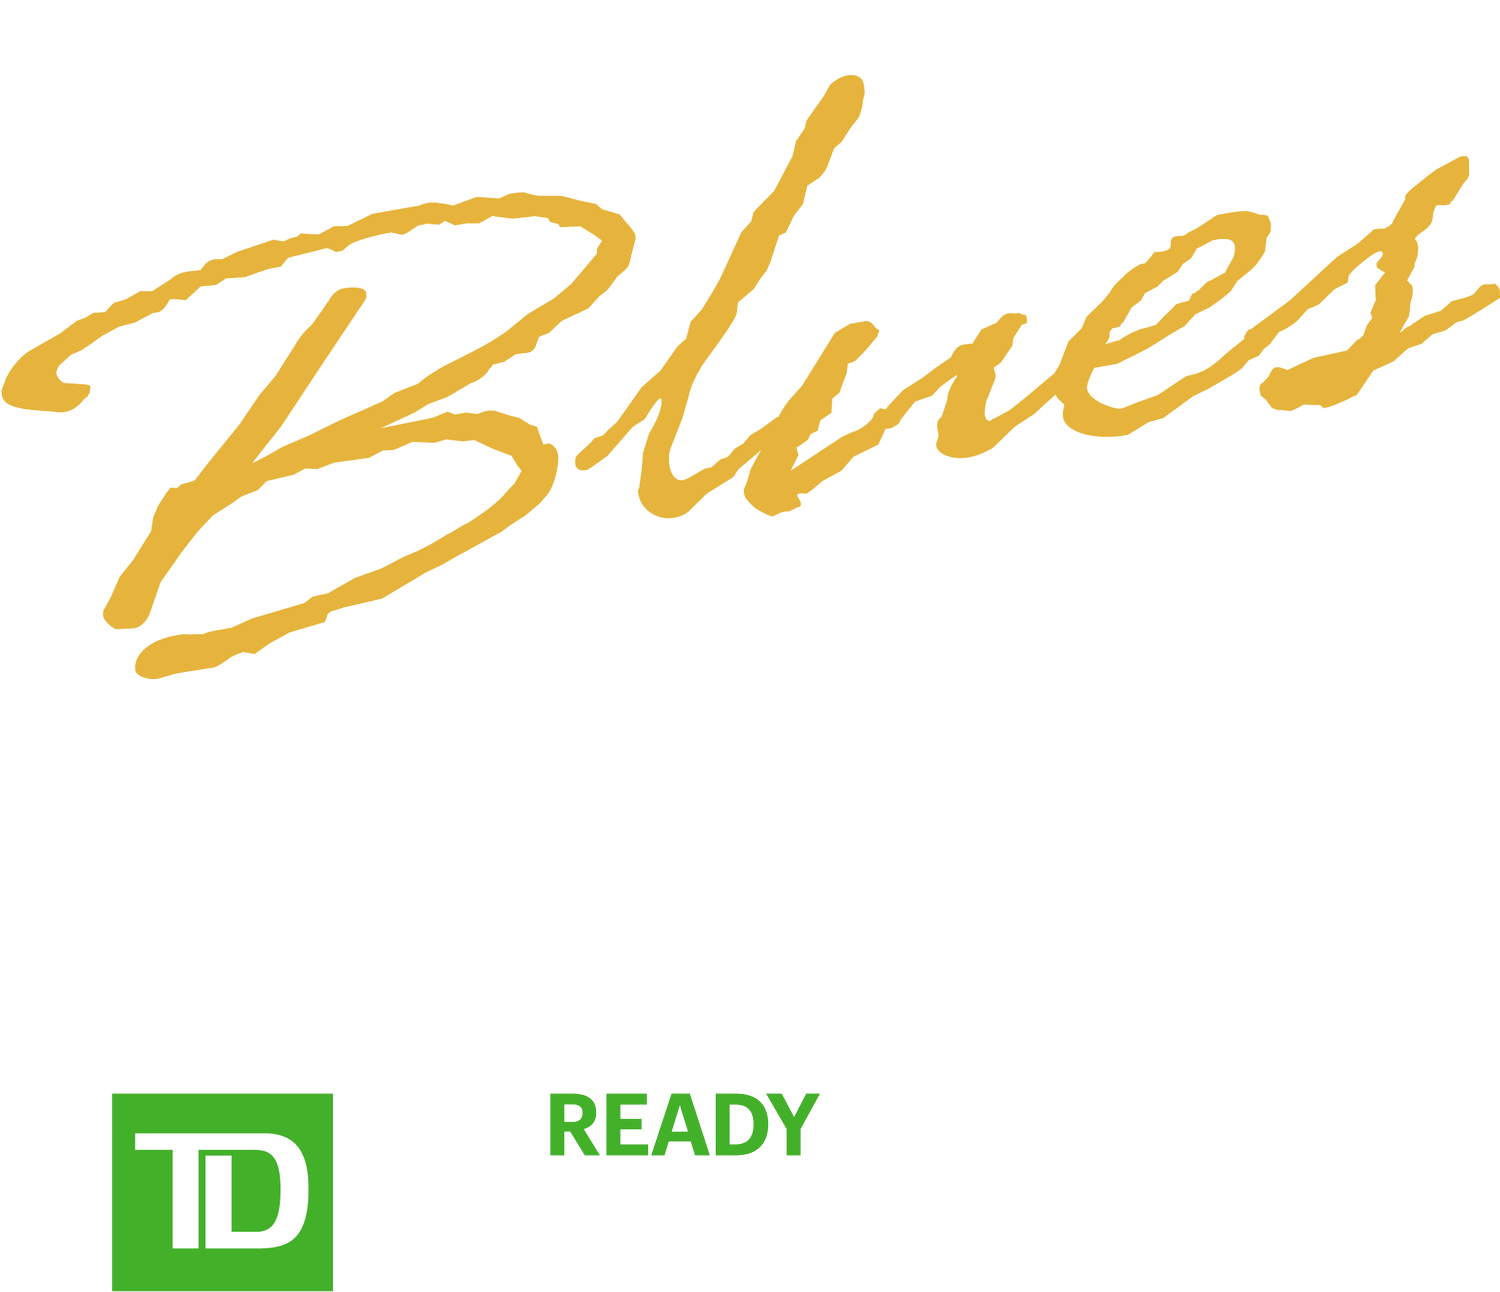 Kitchener Blues Festival